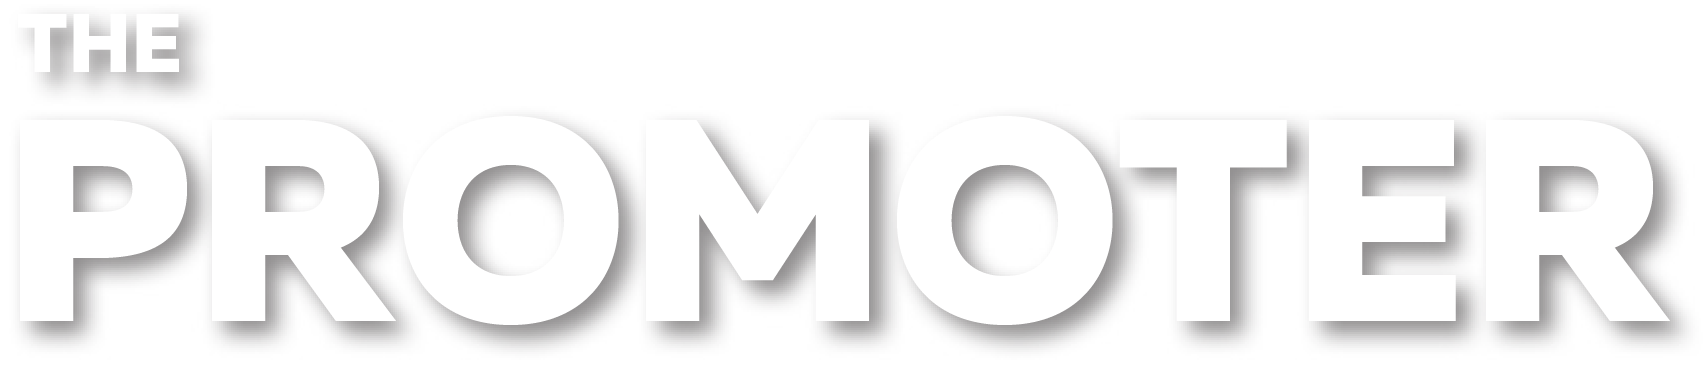 Promoter Logo PNG Image